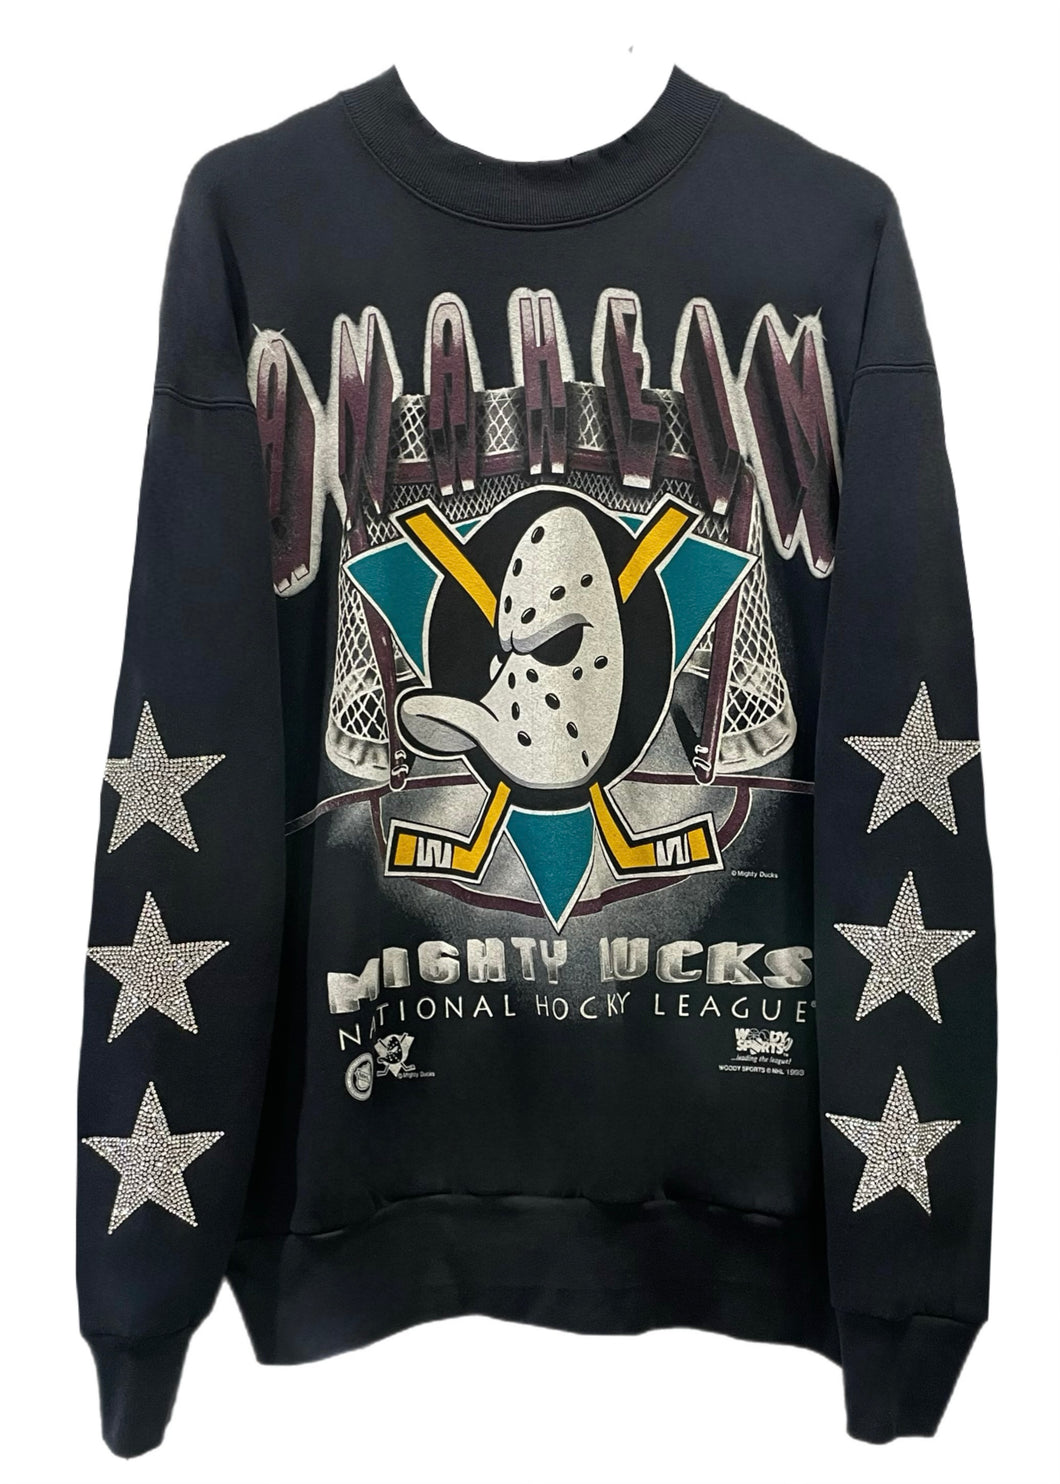 Anaheim Ducks, NHL One of a KIND Vintage “Mighty Ducks” Super Rare Find 1993 Sweatshirt with Three Crystal Star Design - Size: L/XL